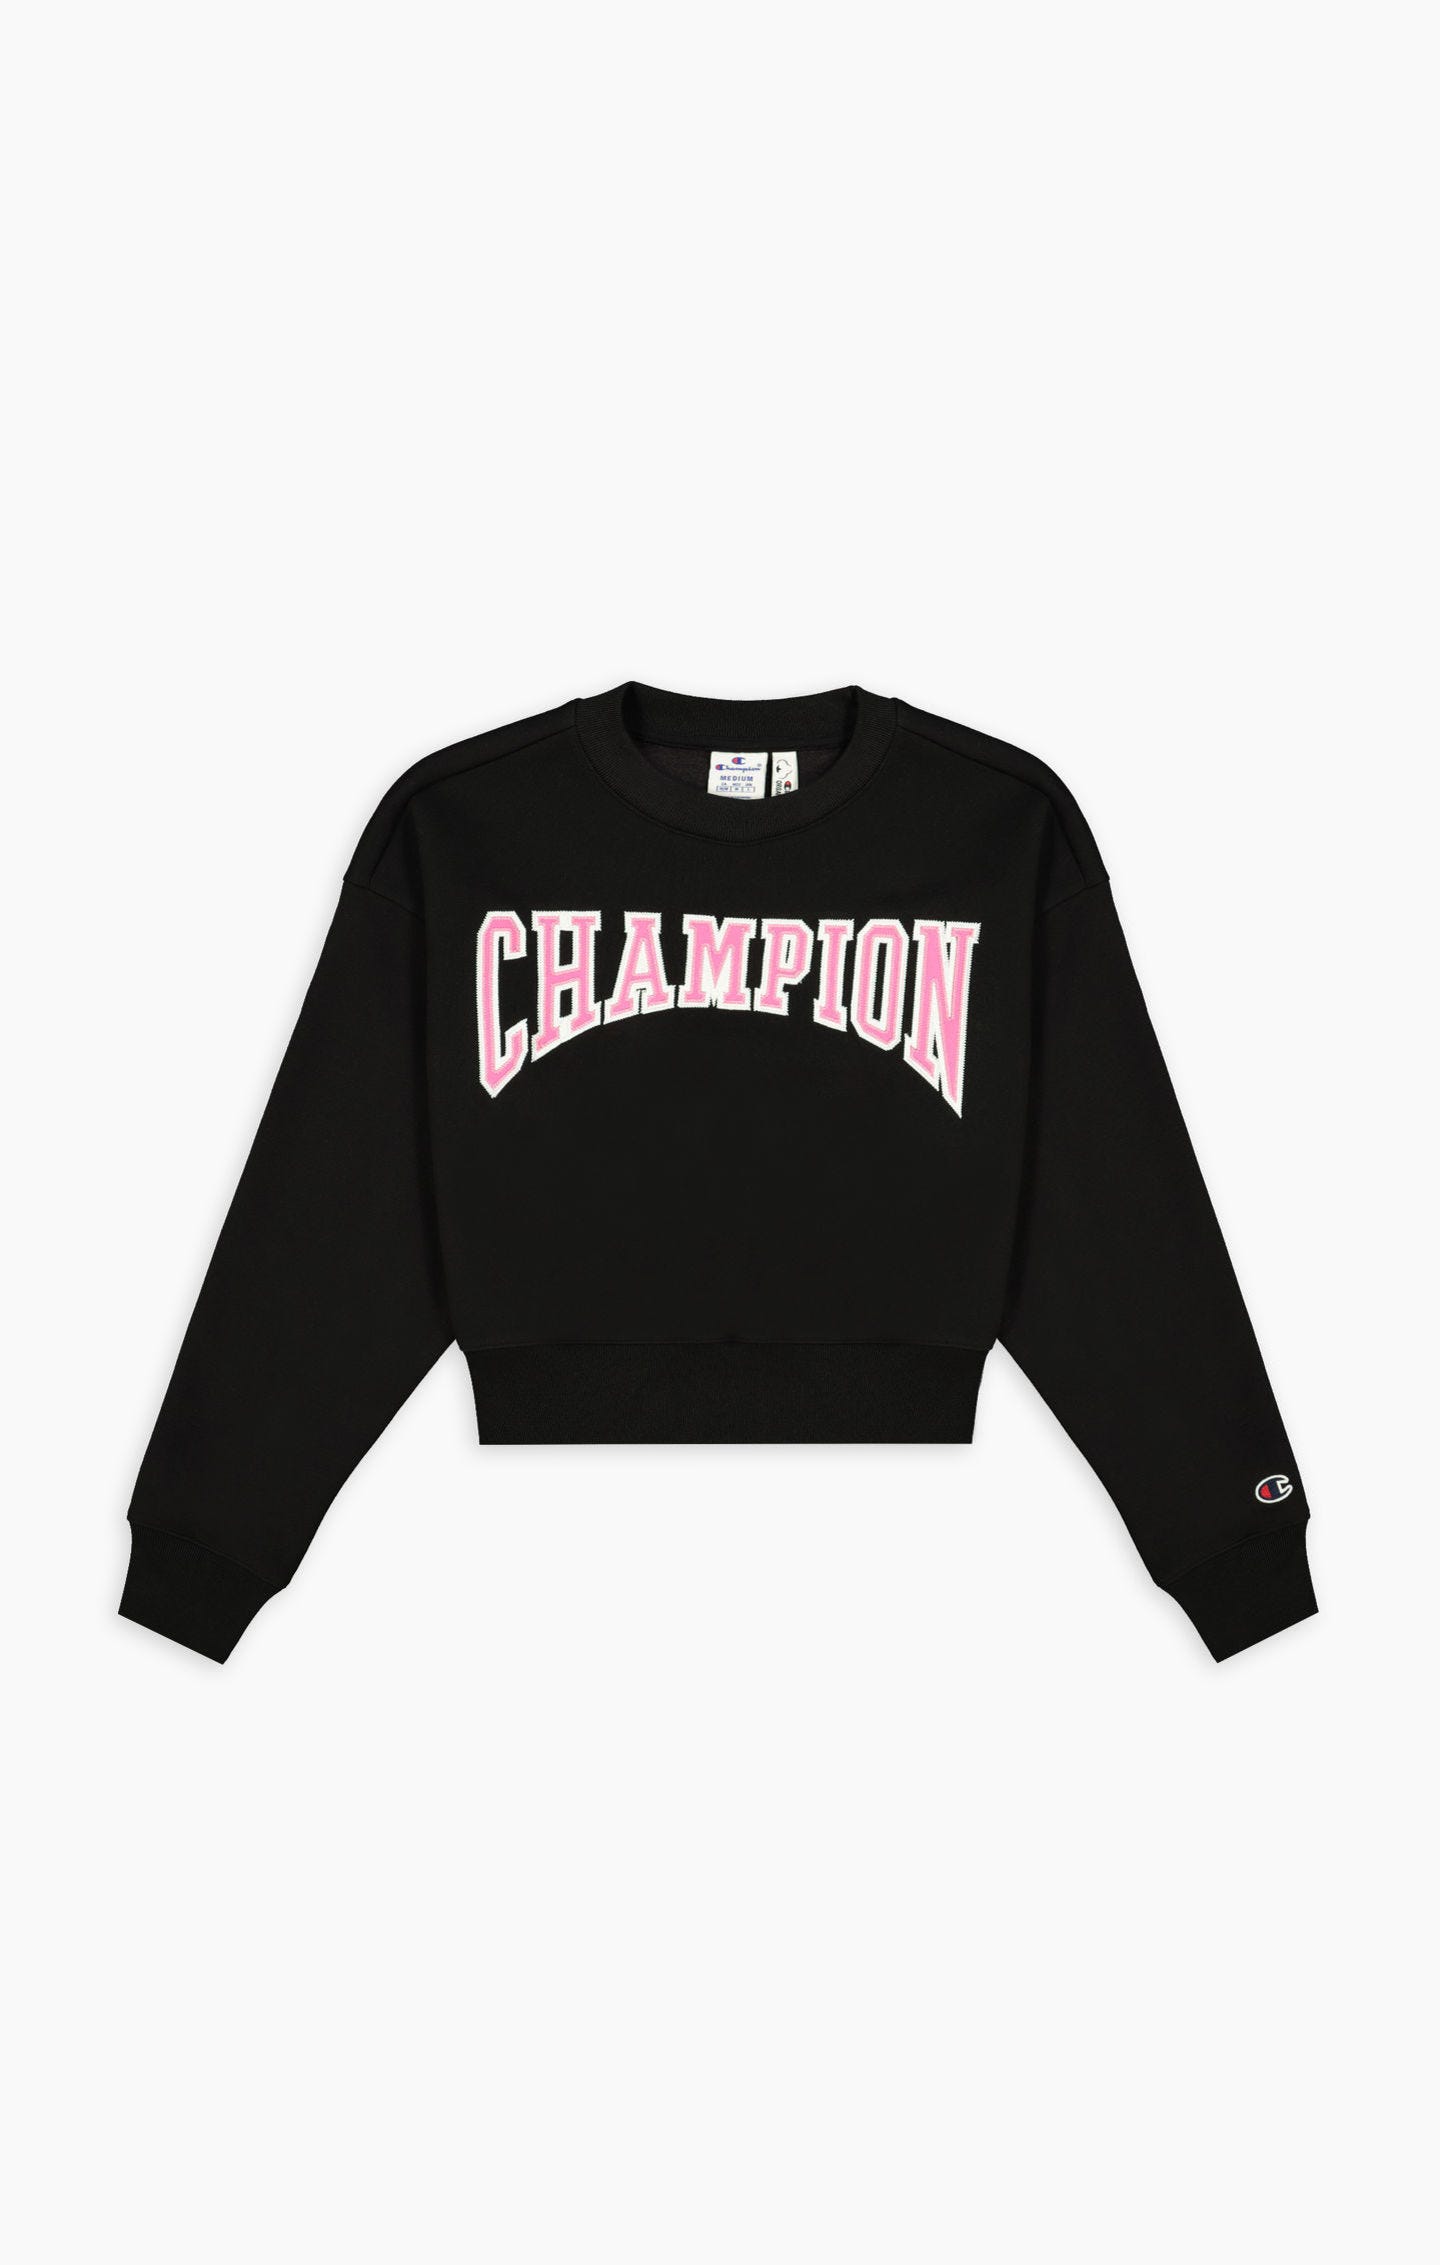 Champion - W's Crewneck Sweatshirt